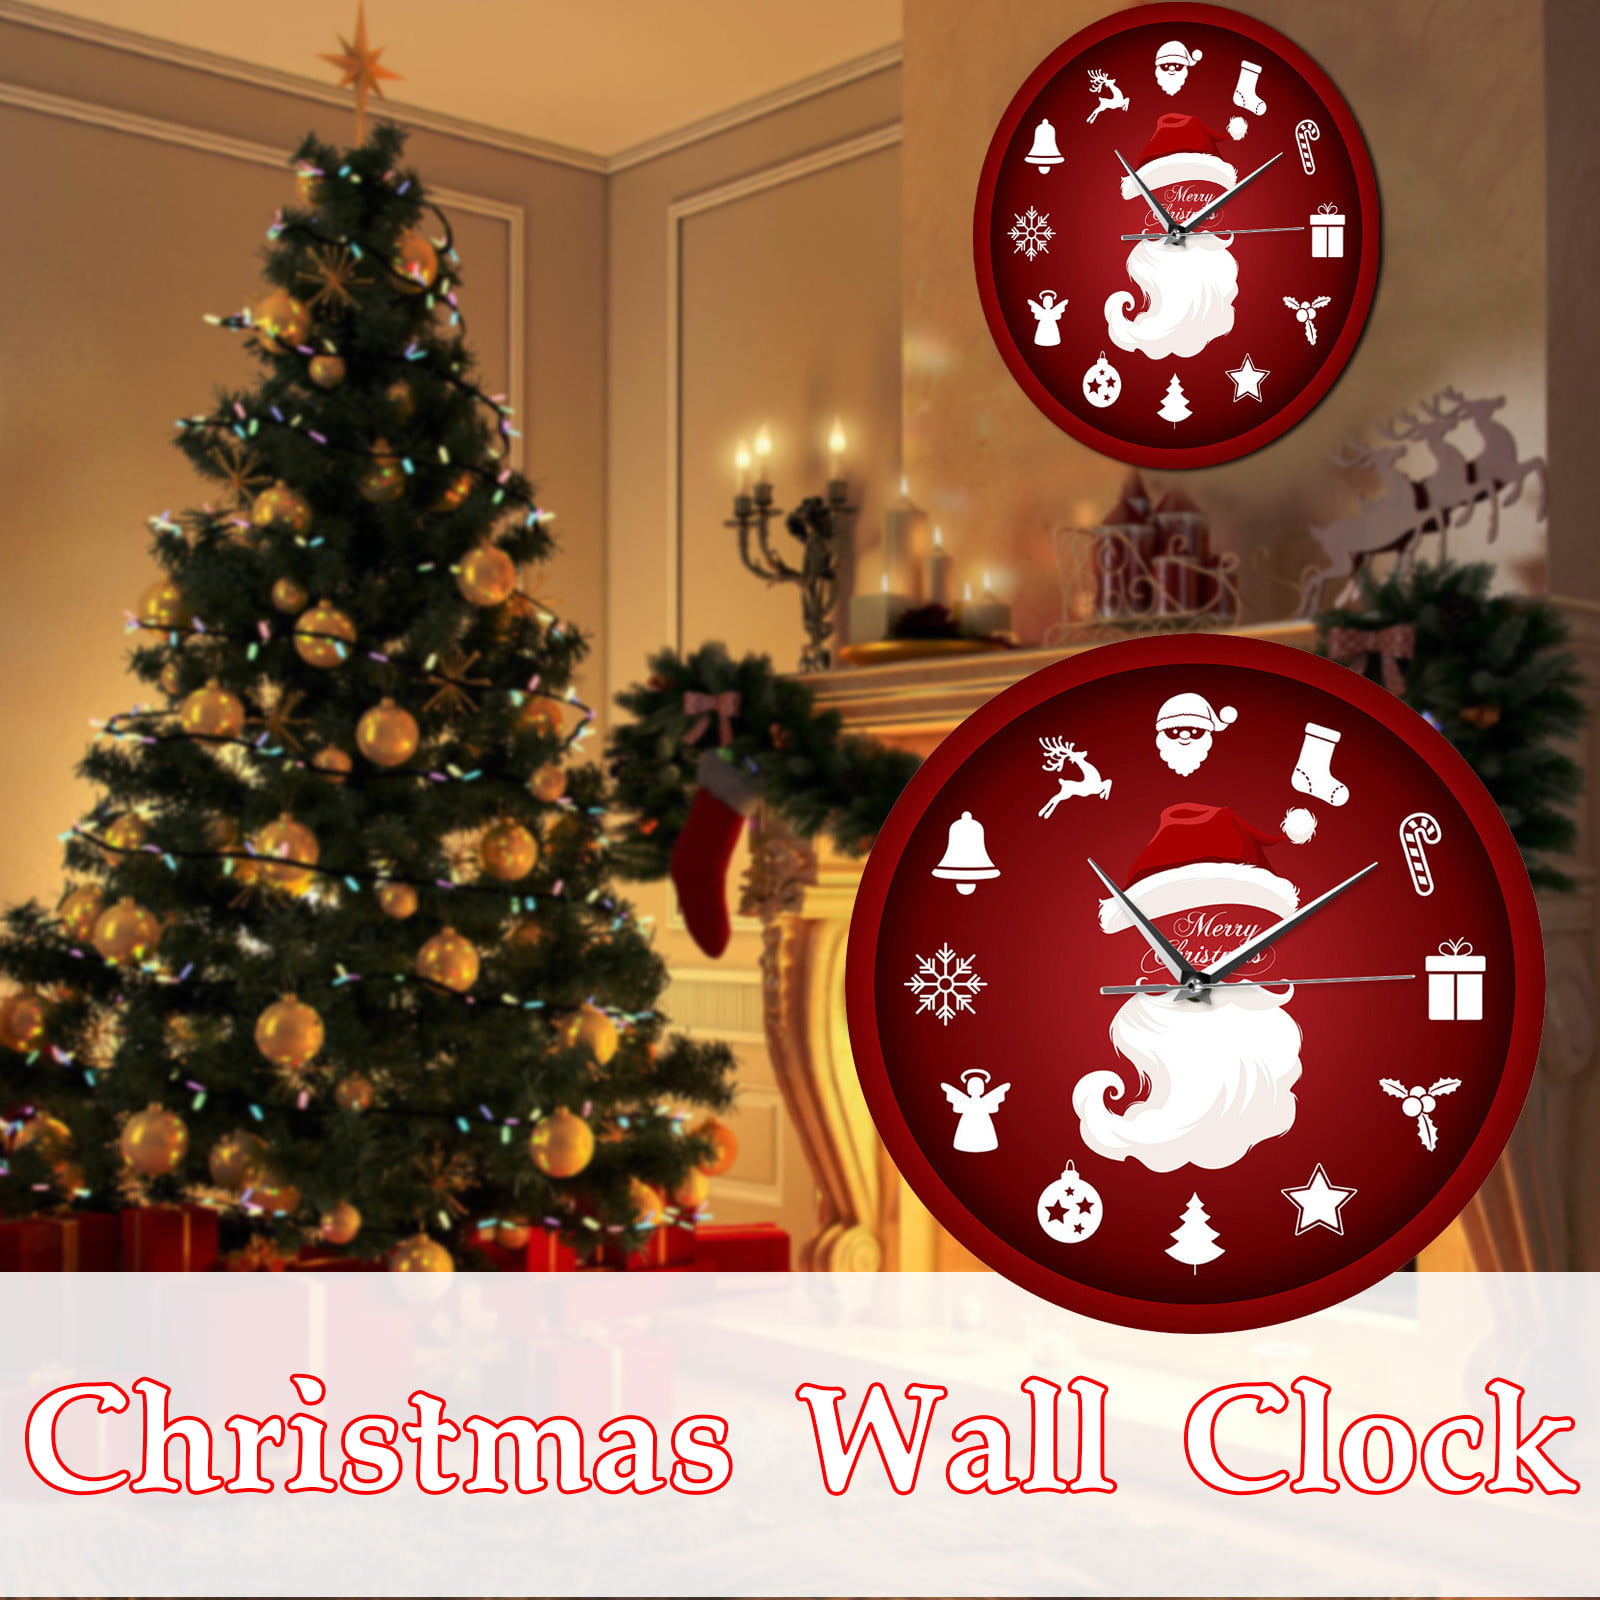 Vinisong Christmas Ho Ho Ho Santa Claus PVC Clock for Wall Black and White  Stripes Santa Decorative Wall Clock Battery Operated Silent Square Wall